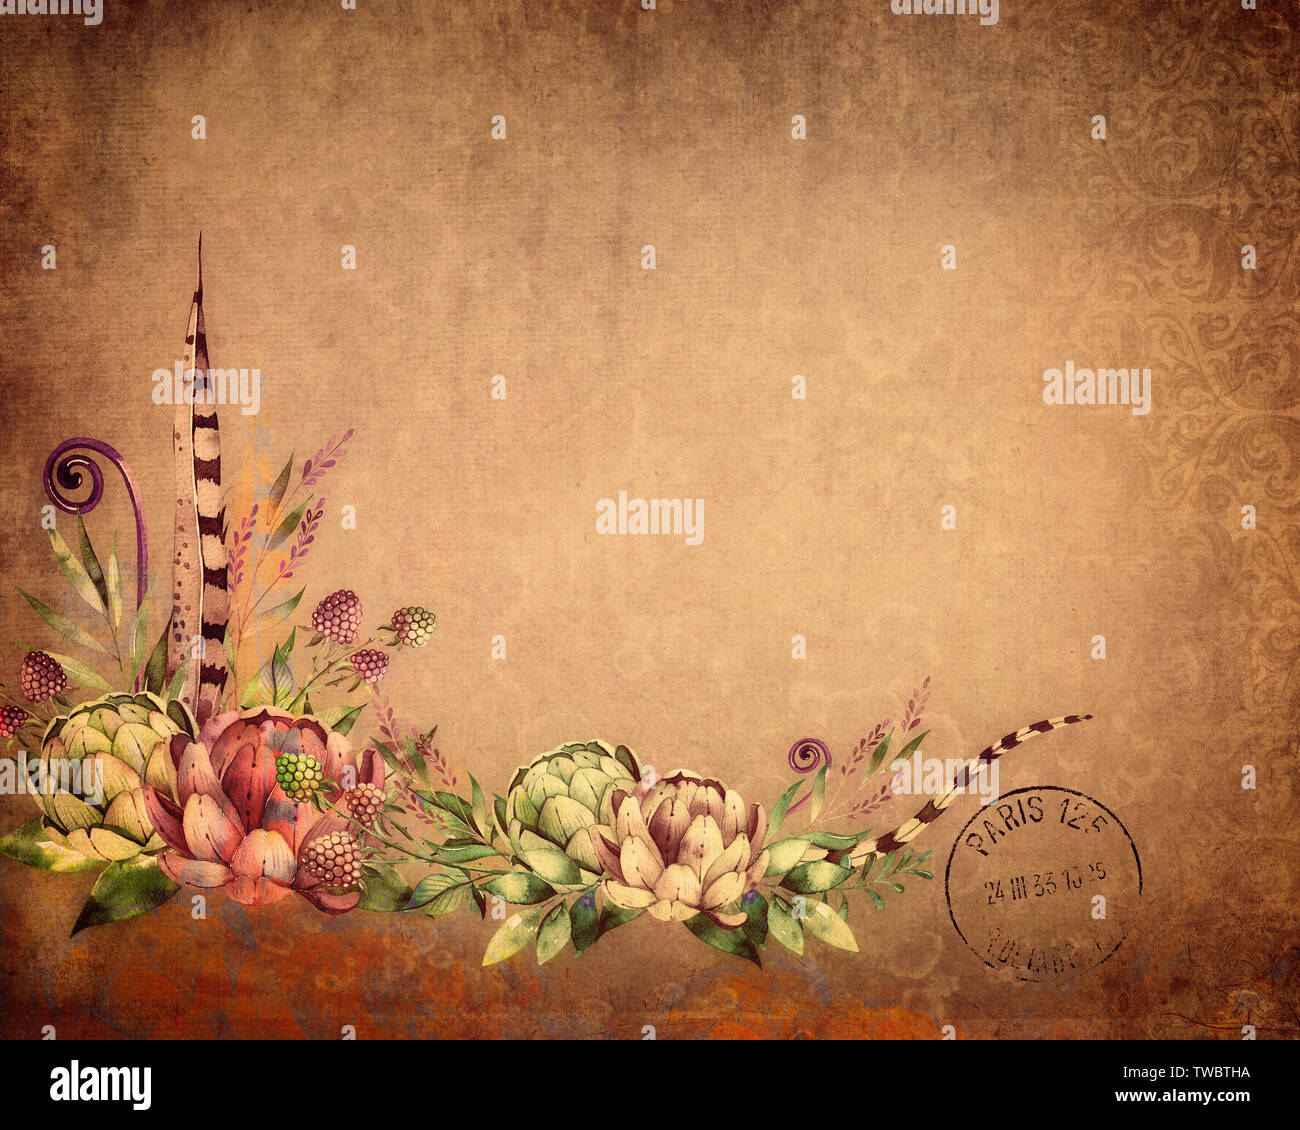 DIGITAL ART: Greeting card design Stock Photo - Alamy